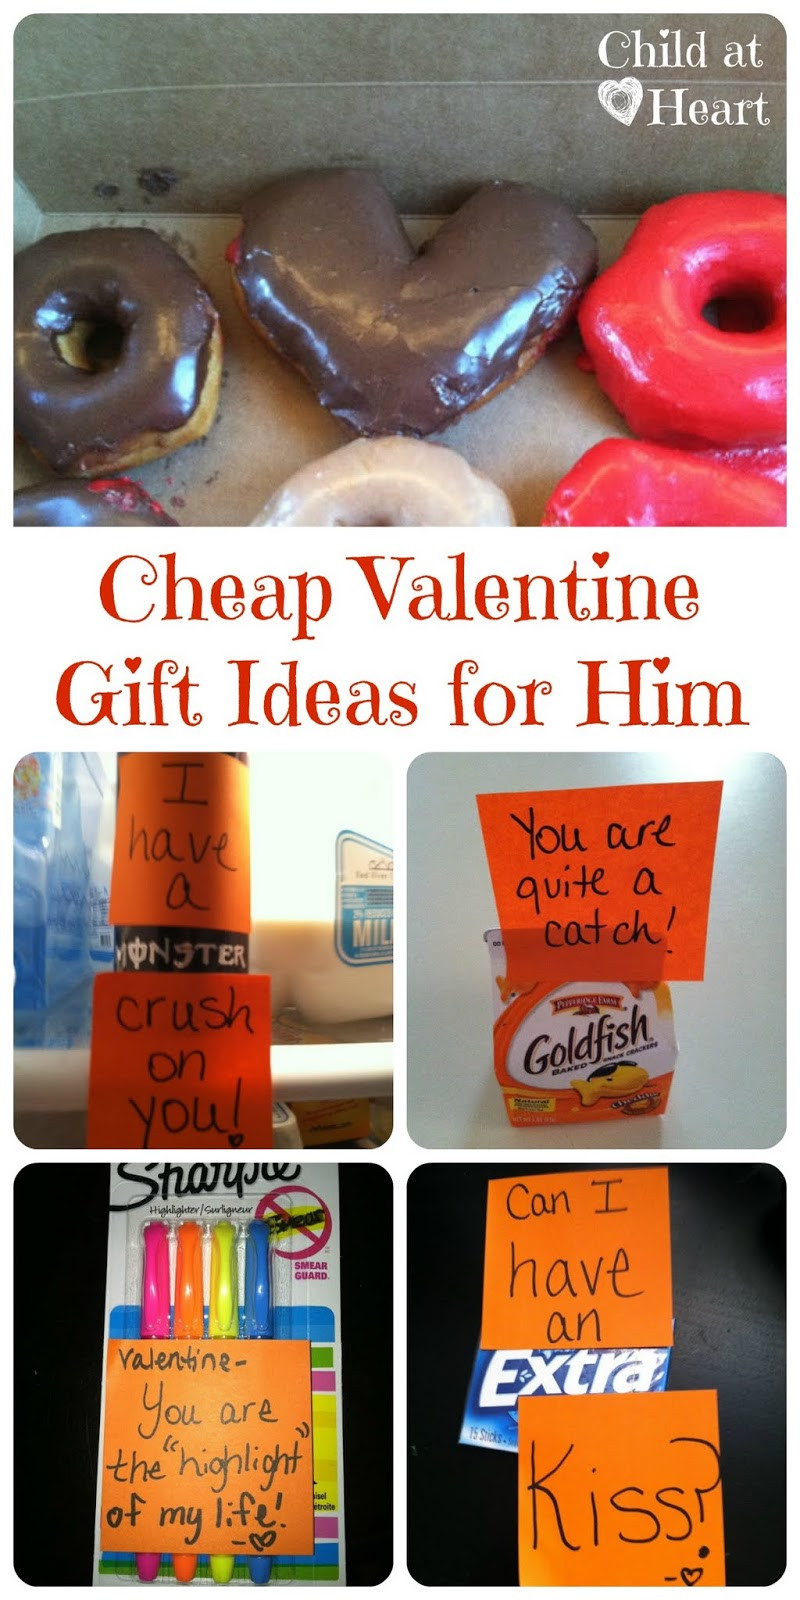 Cheap Gift Ideas For Boyfriend
 Cheap Valentine Gift Ideas for Him Child at Heart Blog